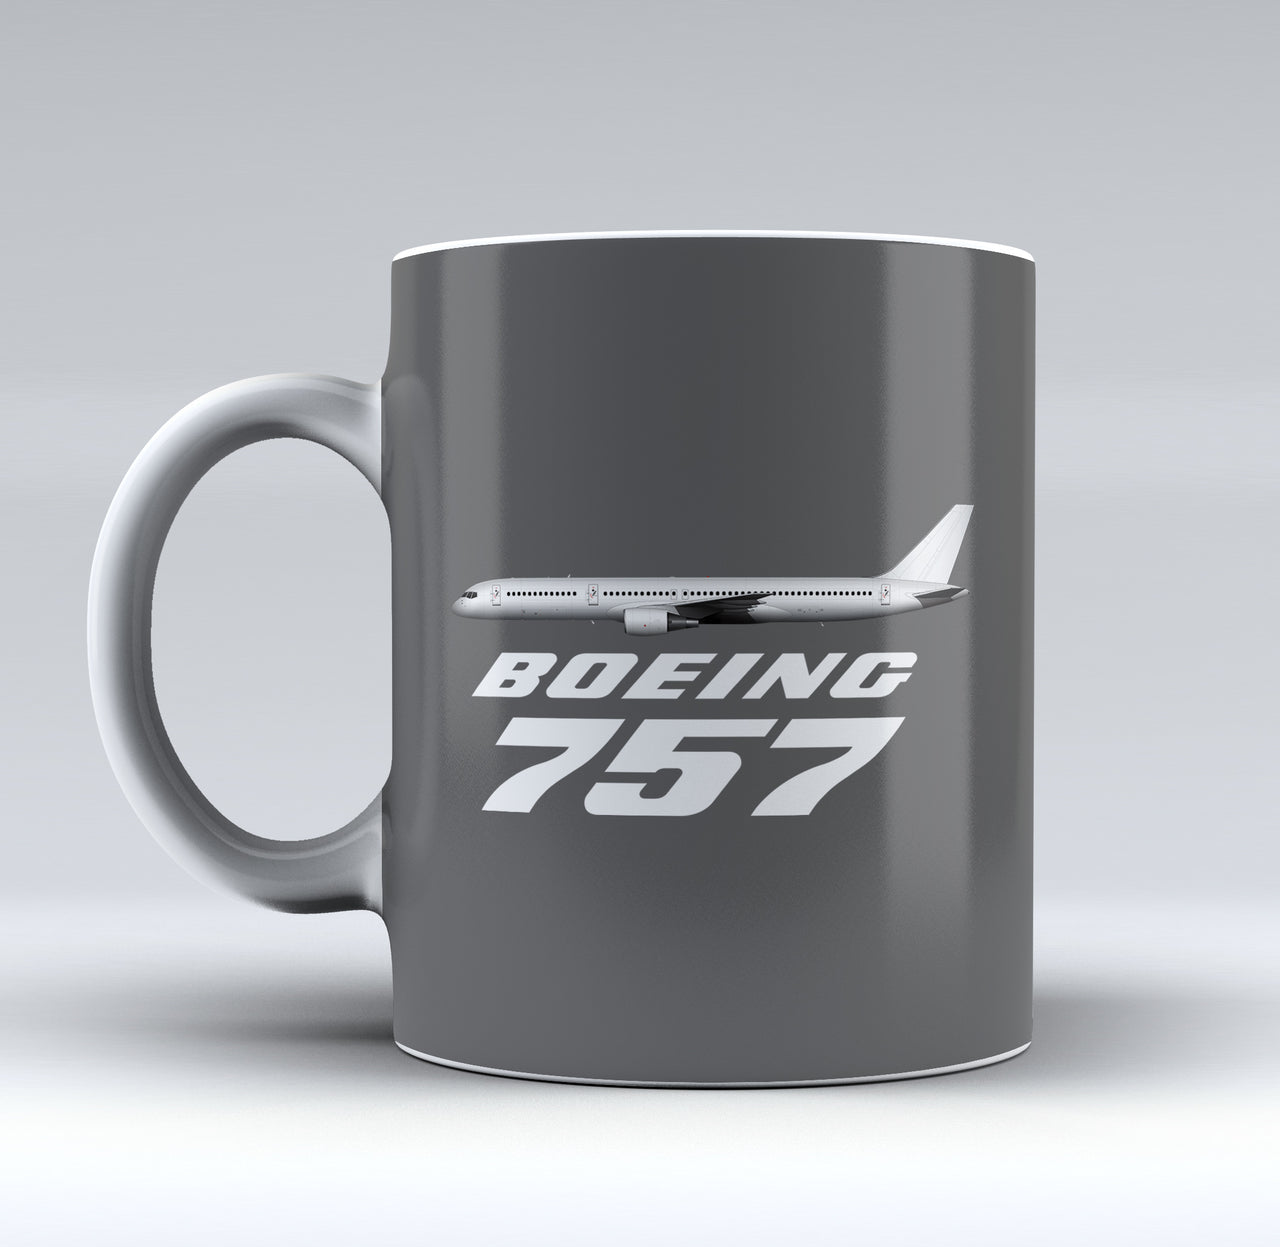 The Boeing 757 Designed Mugs